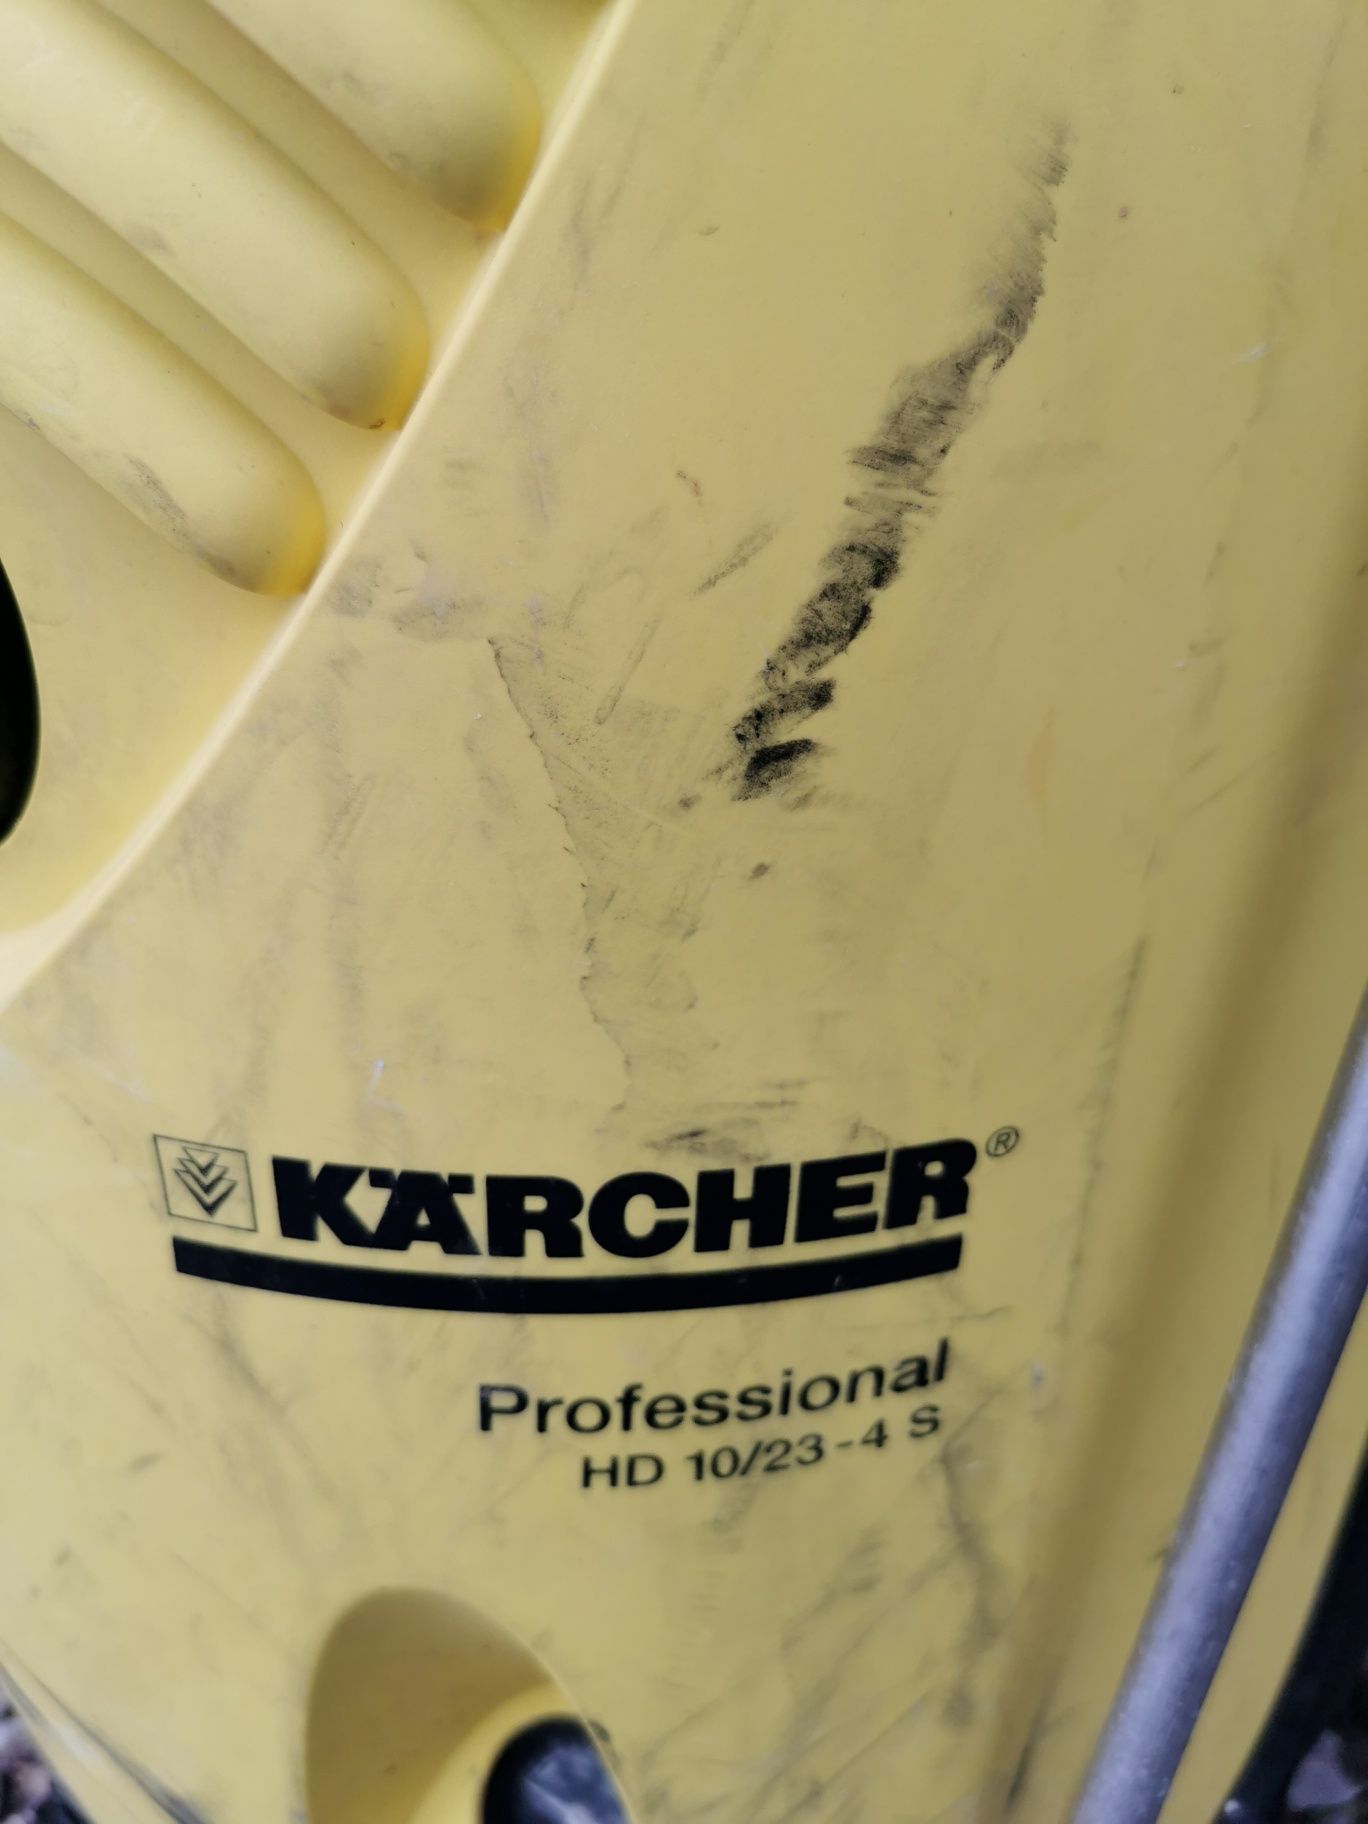 Karcher HD 10/23 4s Professional